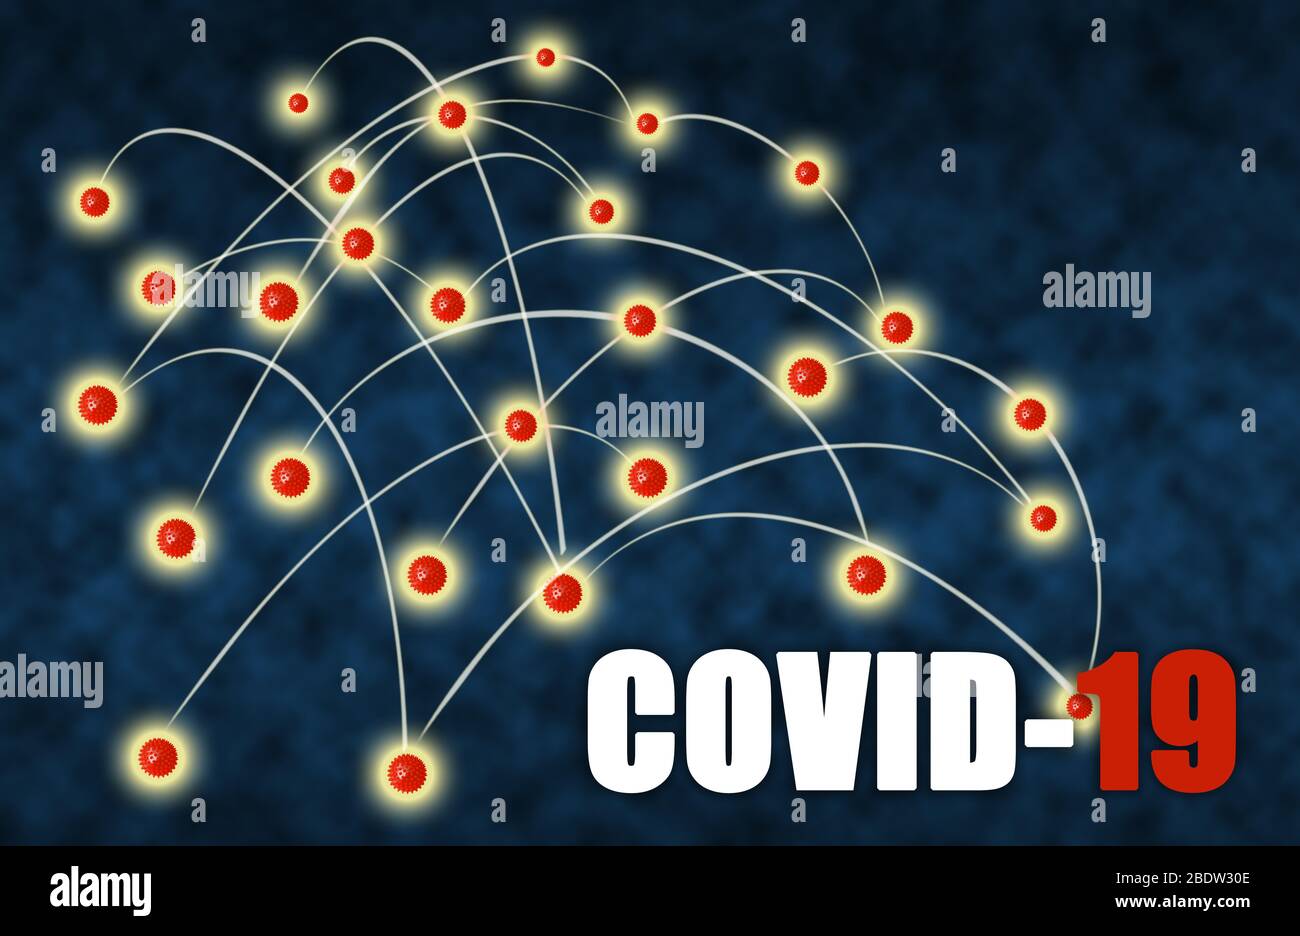 COVID-19 coronavirus pandemic network of virus spread. Concept of virus spread through travel and social community transmission. Stock Photo